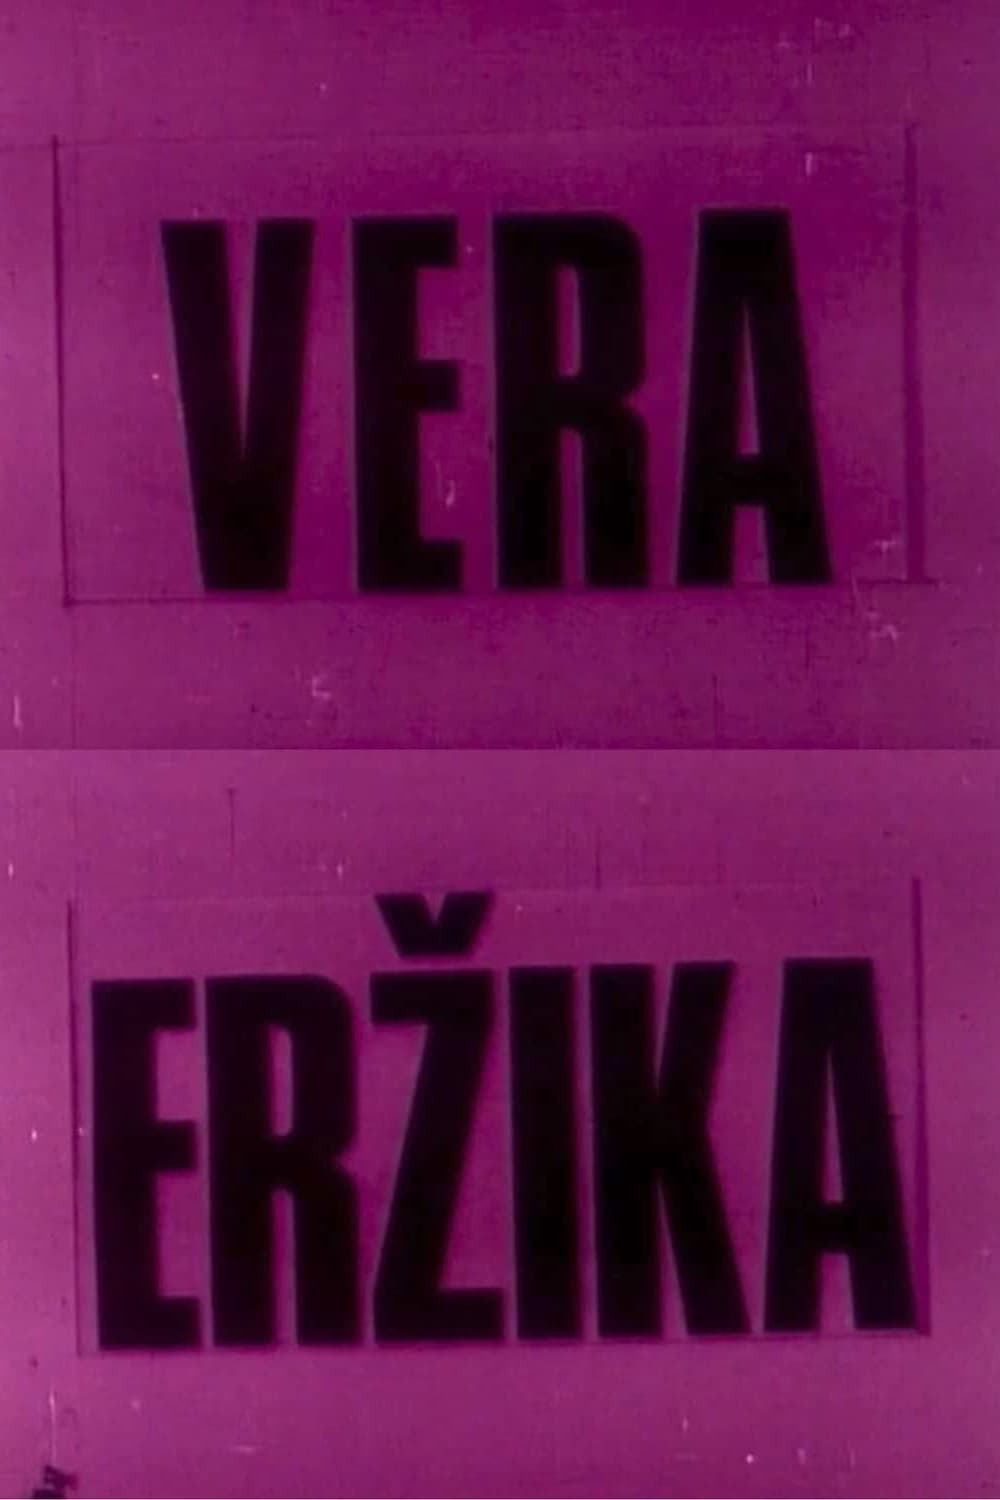 Vera and Erzika